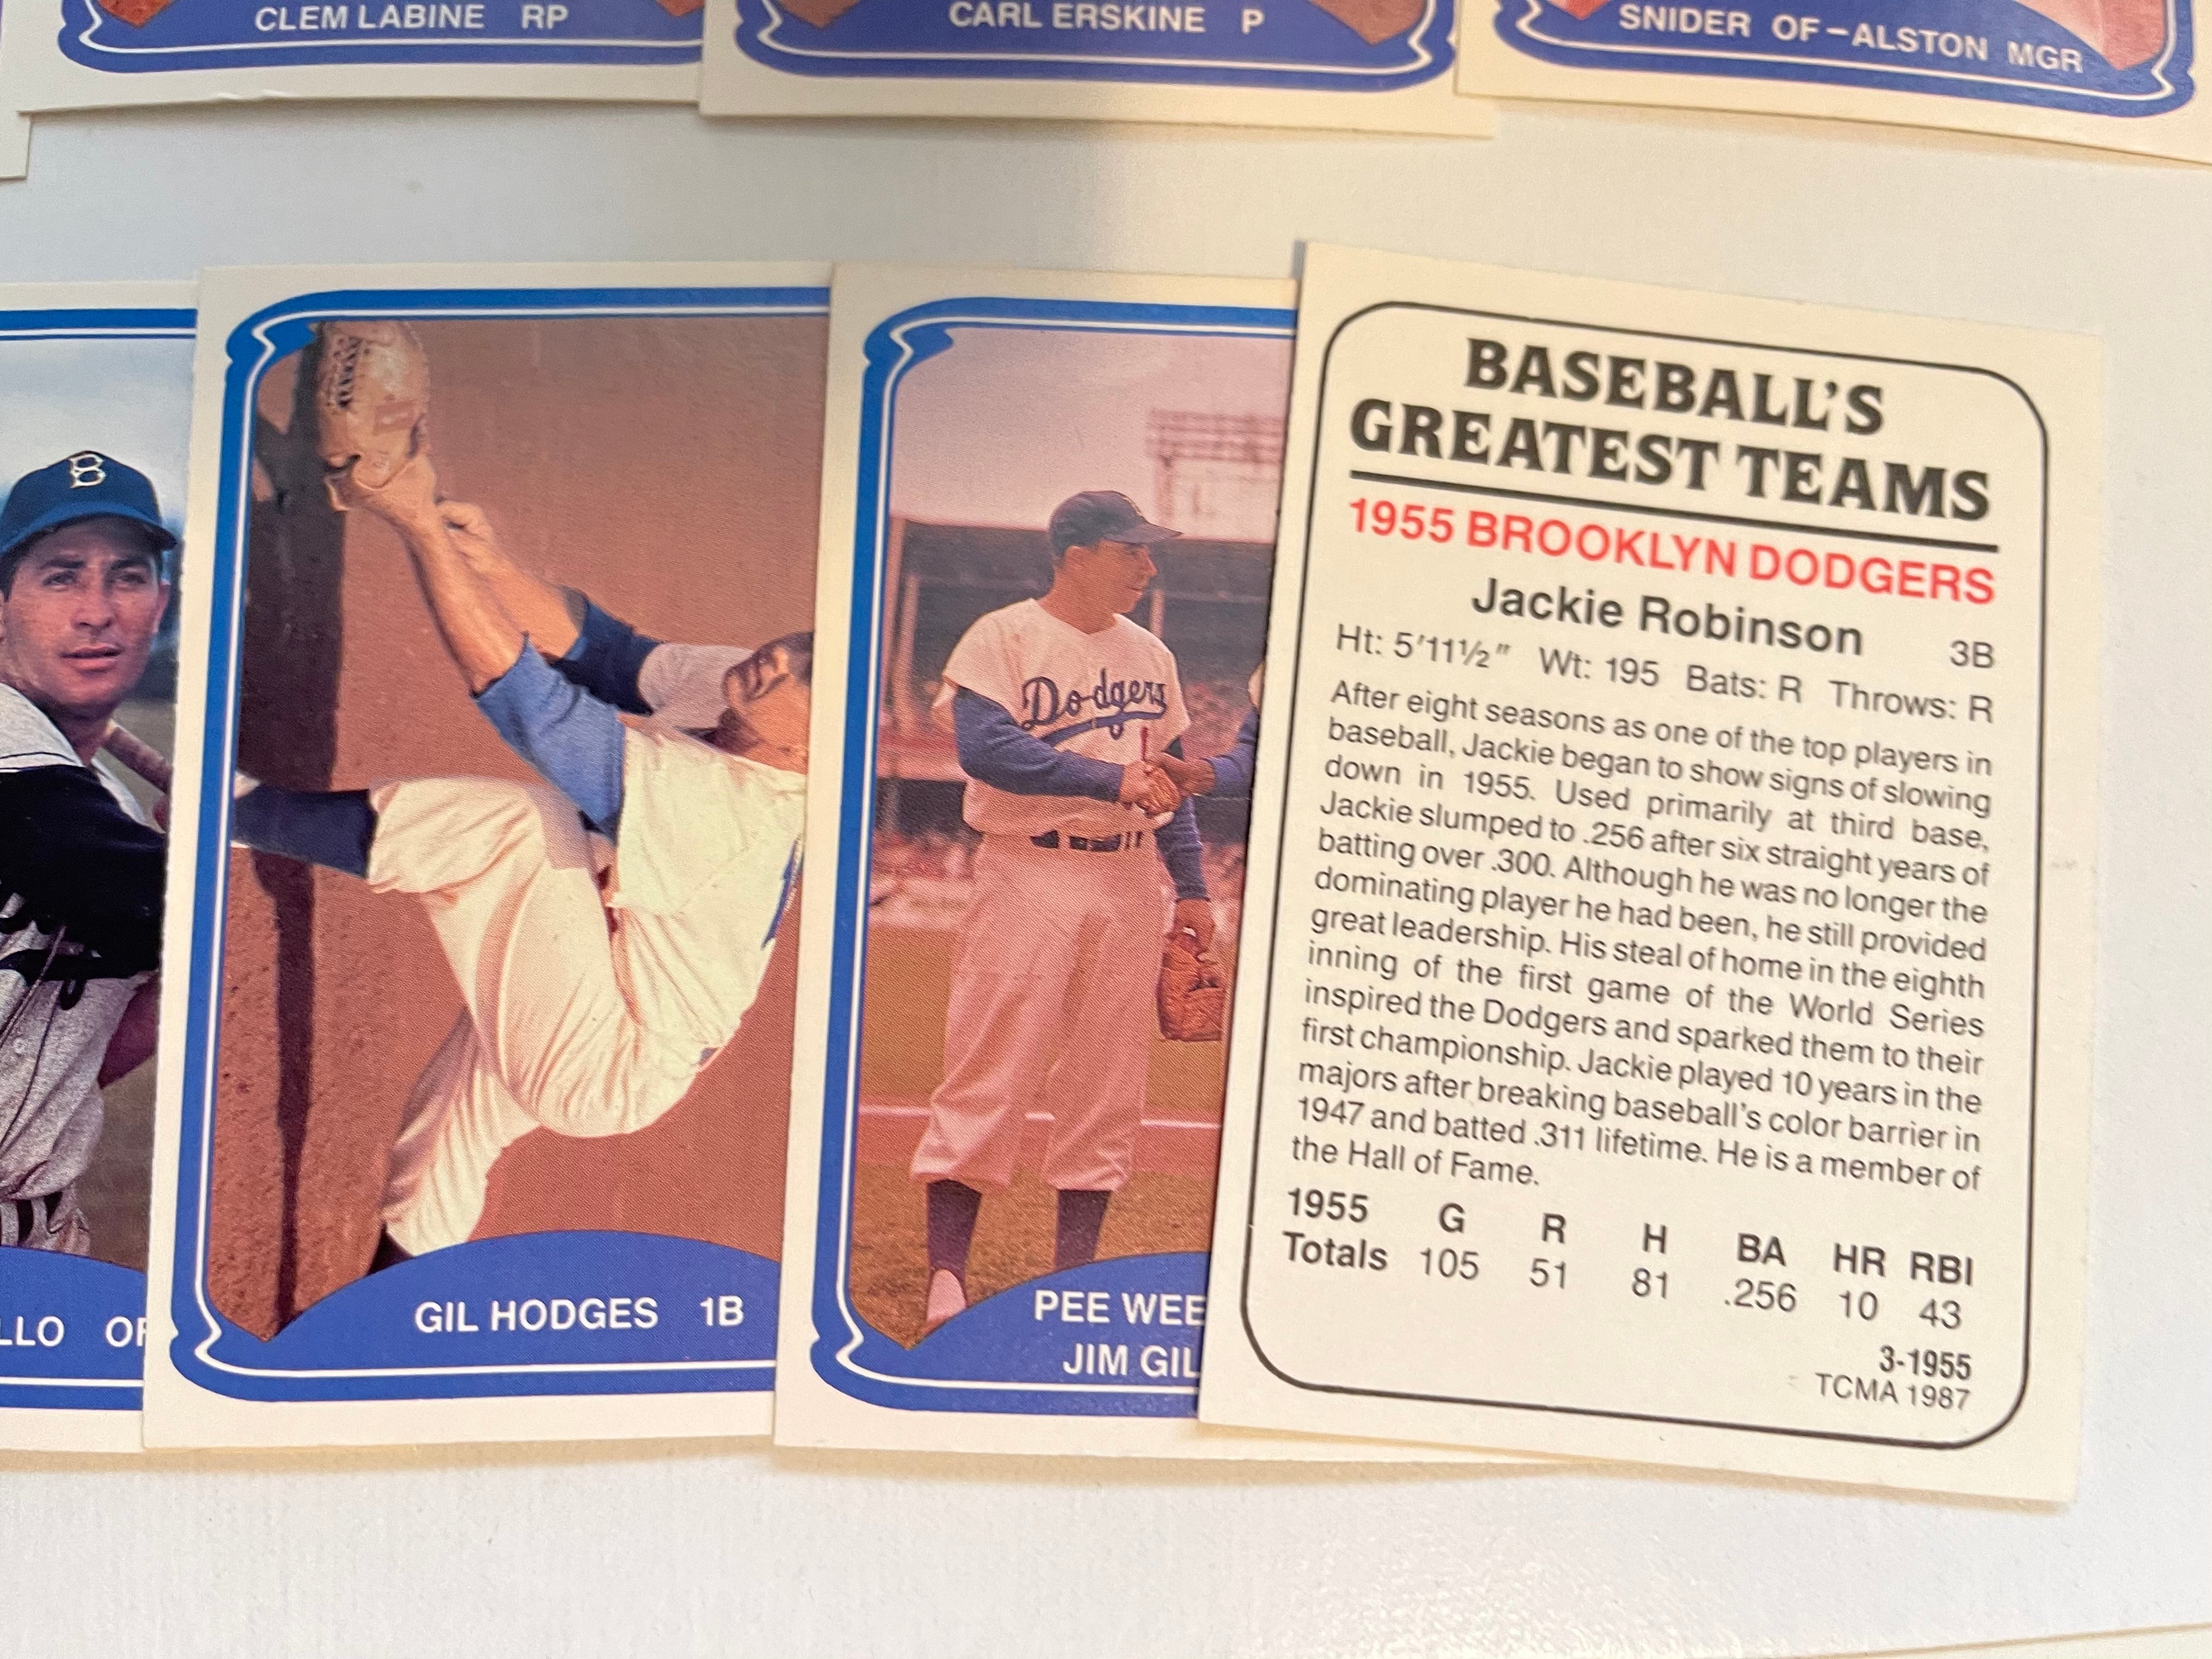 1955 Brooklyn Dodgers baseball card team set TCMA 1987